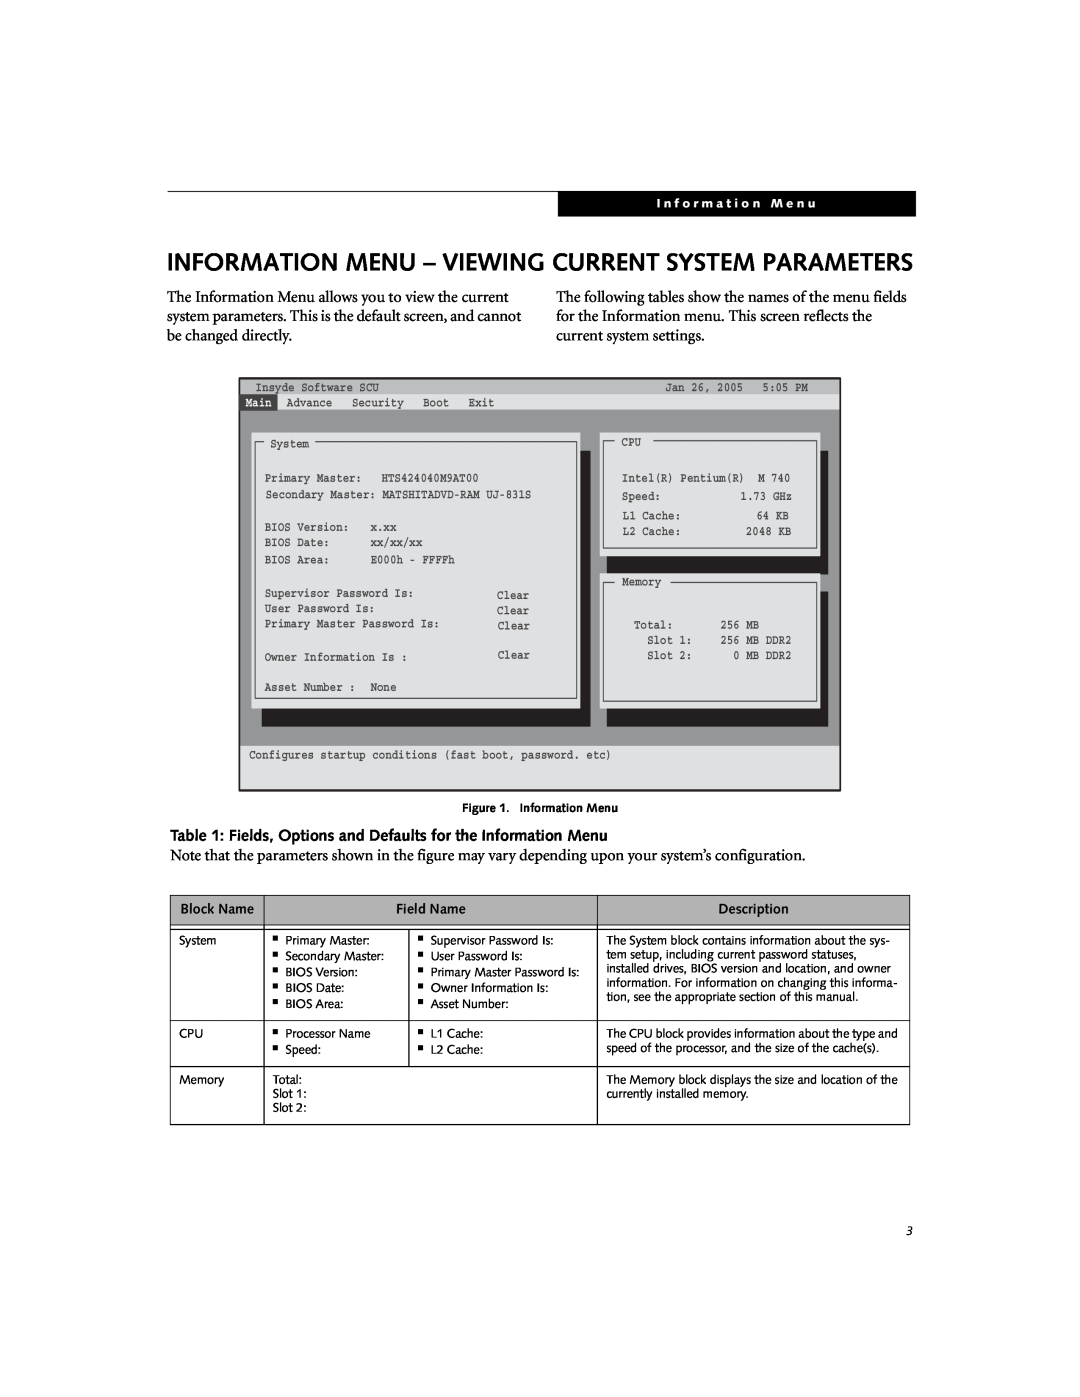 Fujitsu Siemens Computers N3510 manual Information Menu - Viewing Current System Parameters 